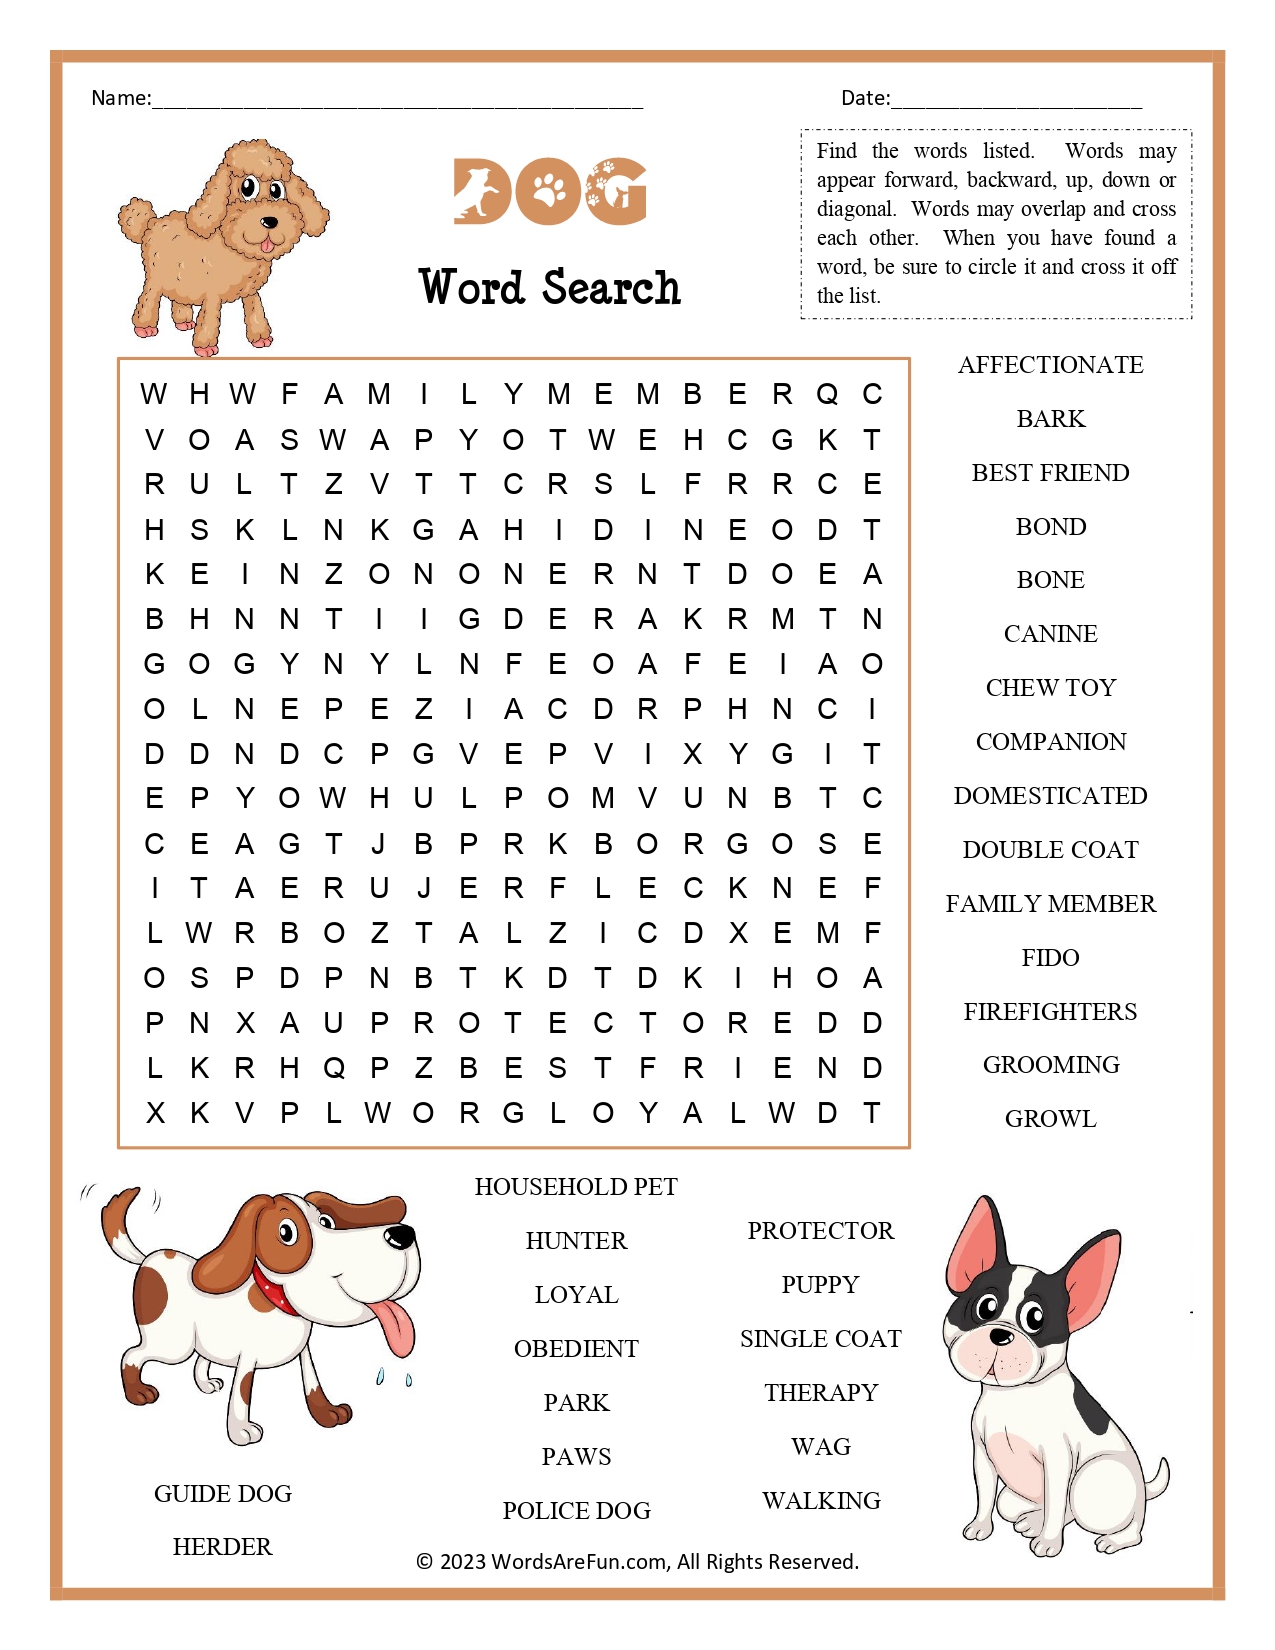 https://www.wordsarefun.com/images/dog-word-search-for-kids.jpg